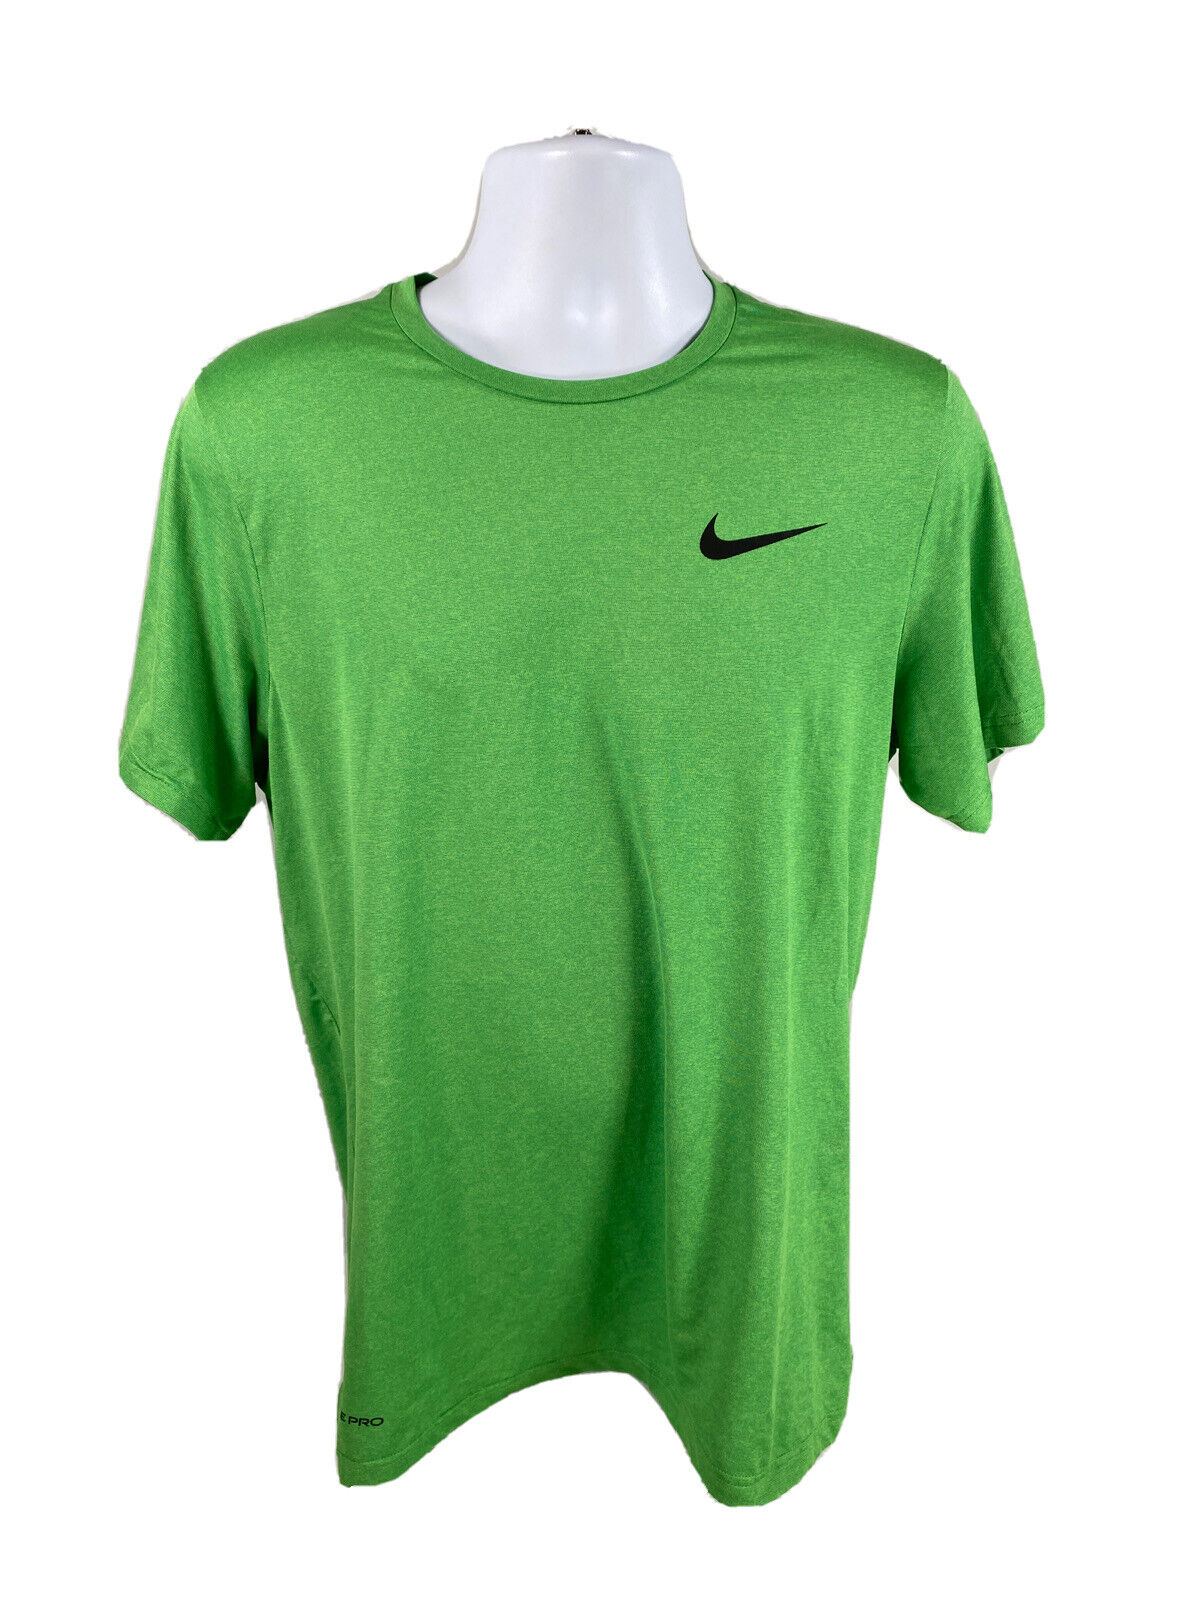 Nike Pro Men's Green Standard Fit Short Sleeve Activewear T-Shirt - S